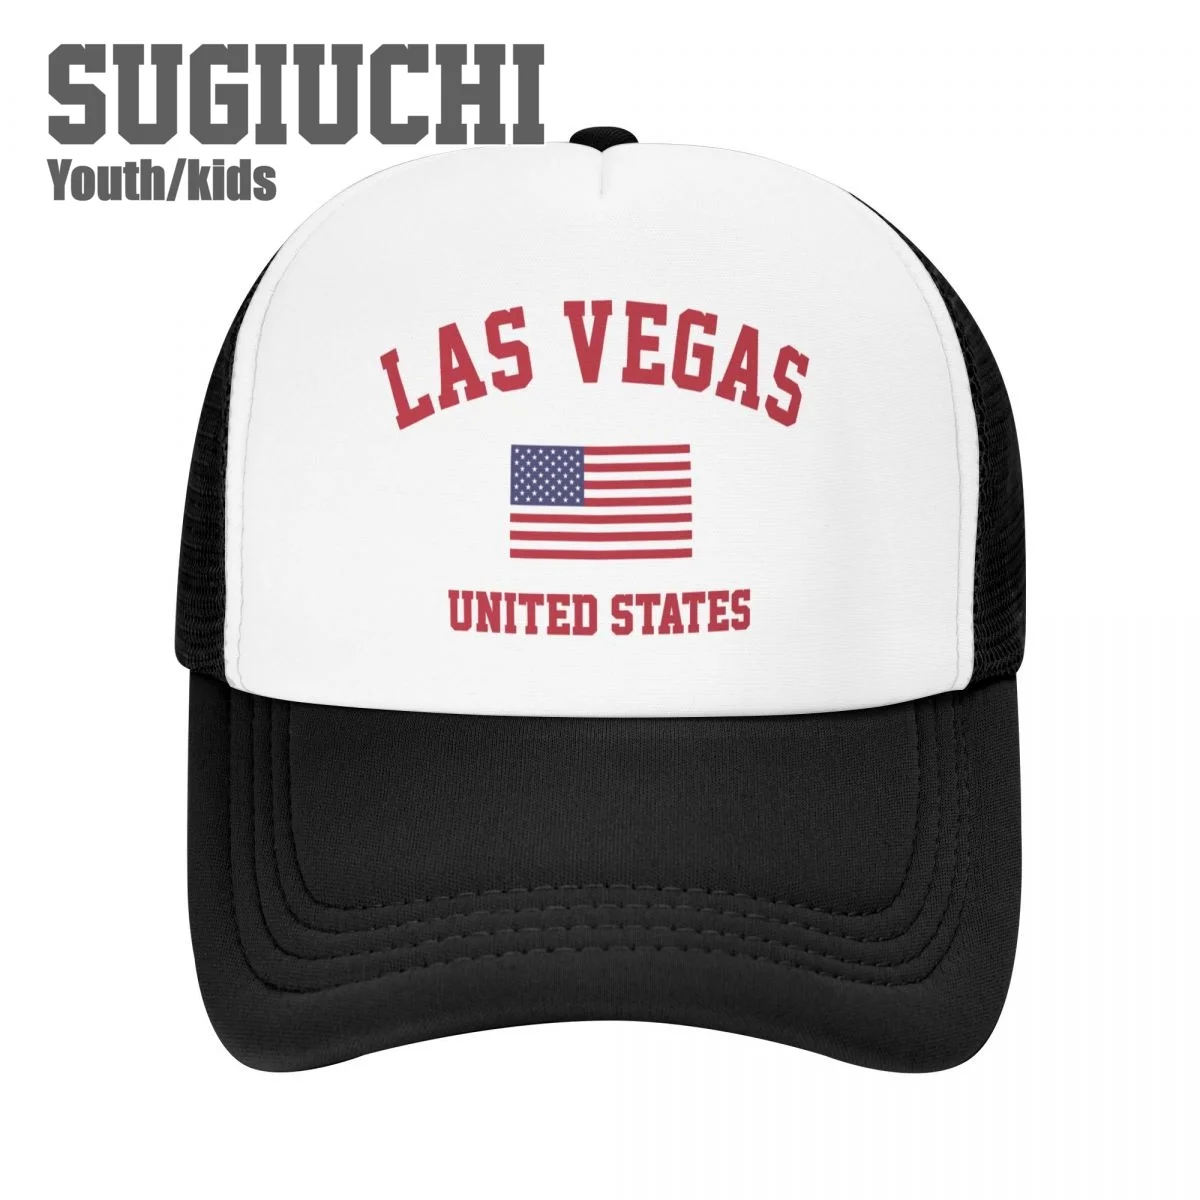 

Kids Mesh Cap Hat Las Vegas Of USA United States City Baseball Caps for Youth Boys Girls Pupil Children's Hats Outdoor Unisex